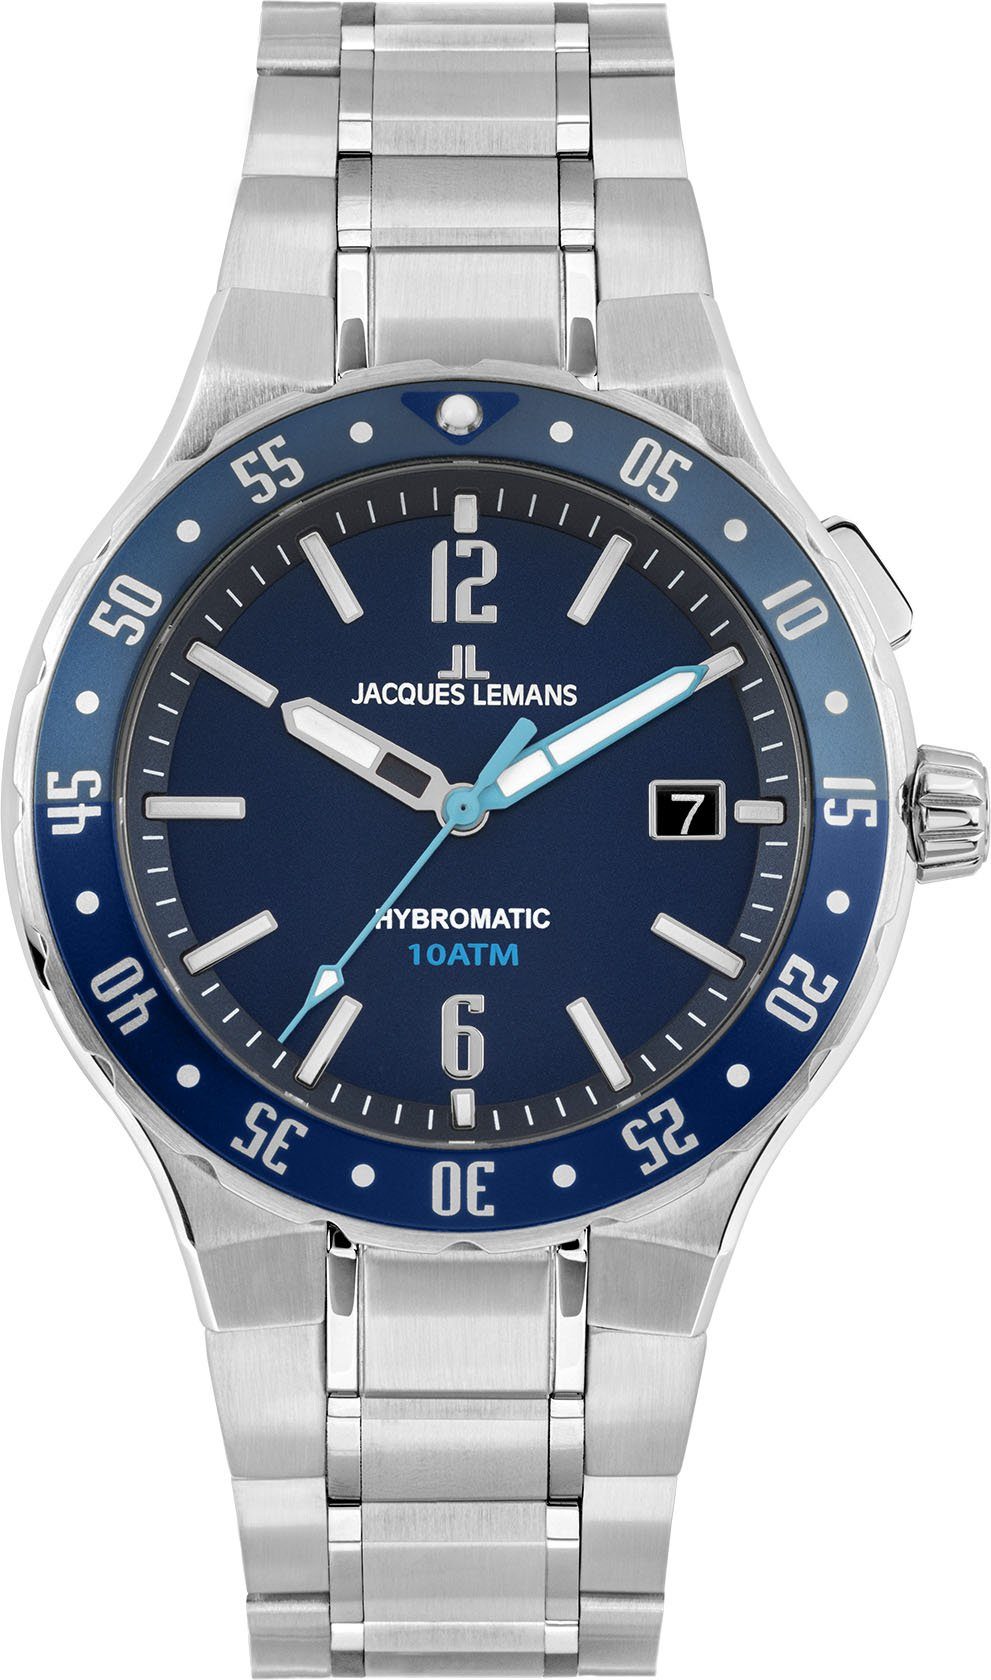 Jacques Lemans Kineticuhr Hybromatic, 1-2109H blau, silber | Armbanduhren